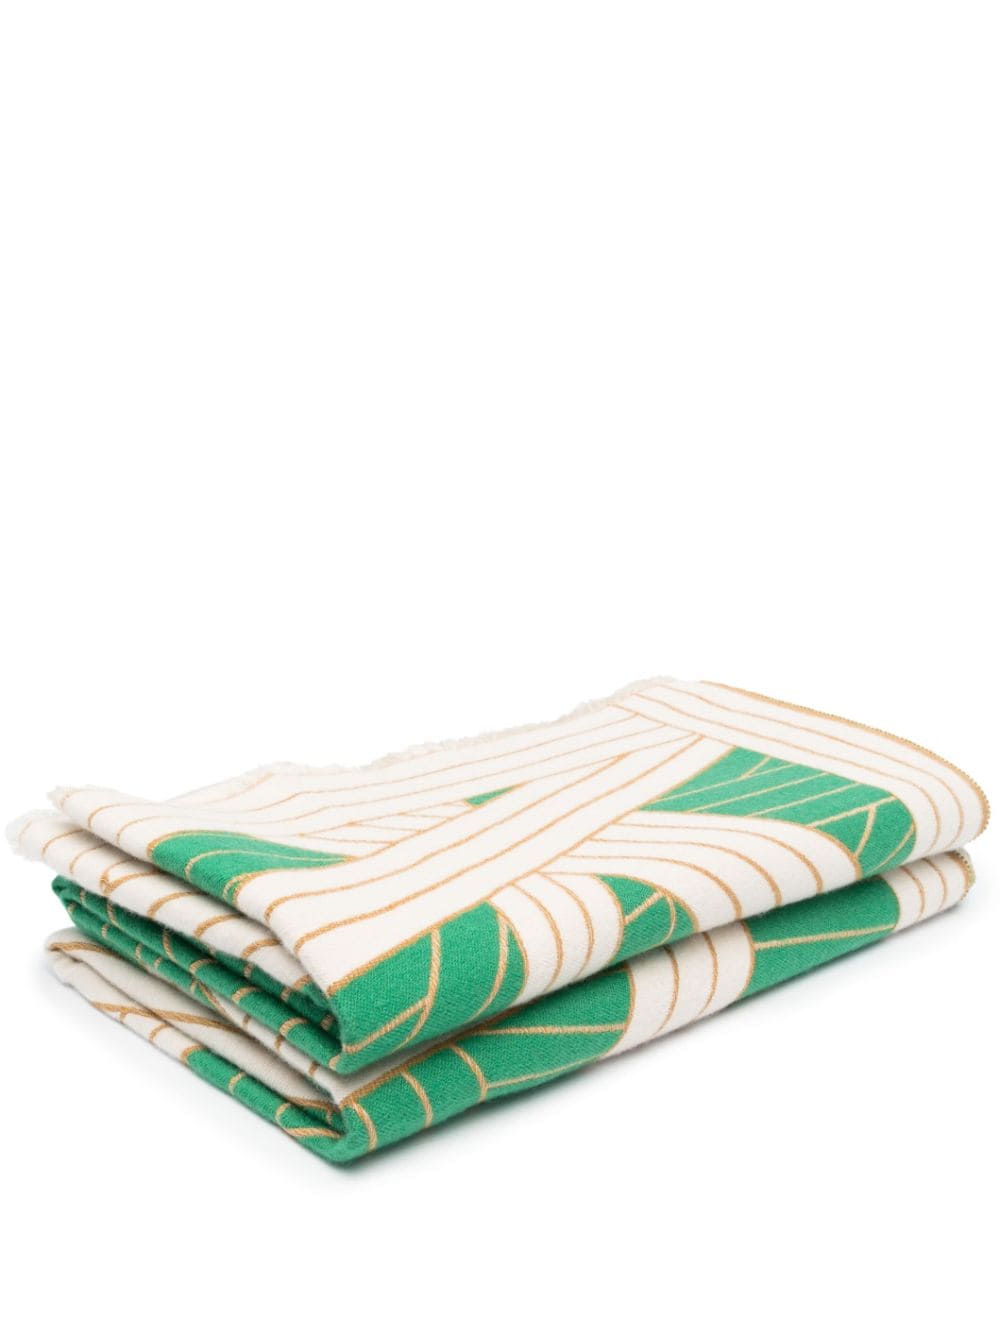 Missoni Home Nastri frayed blanket - Green